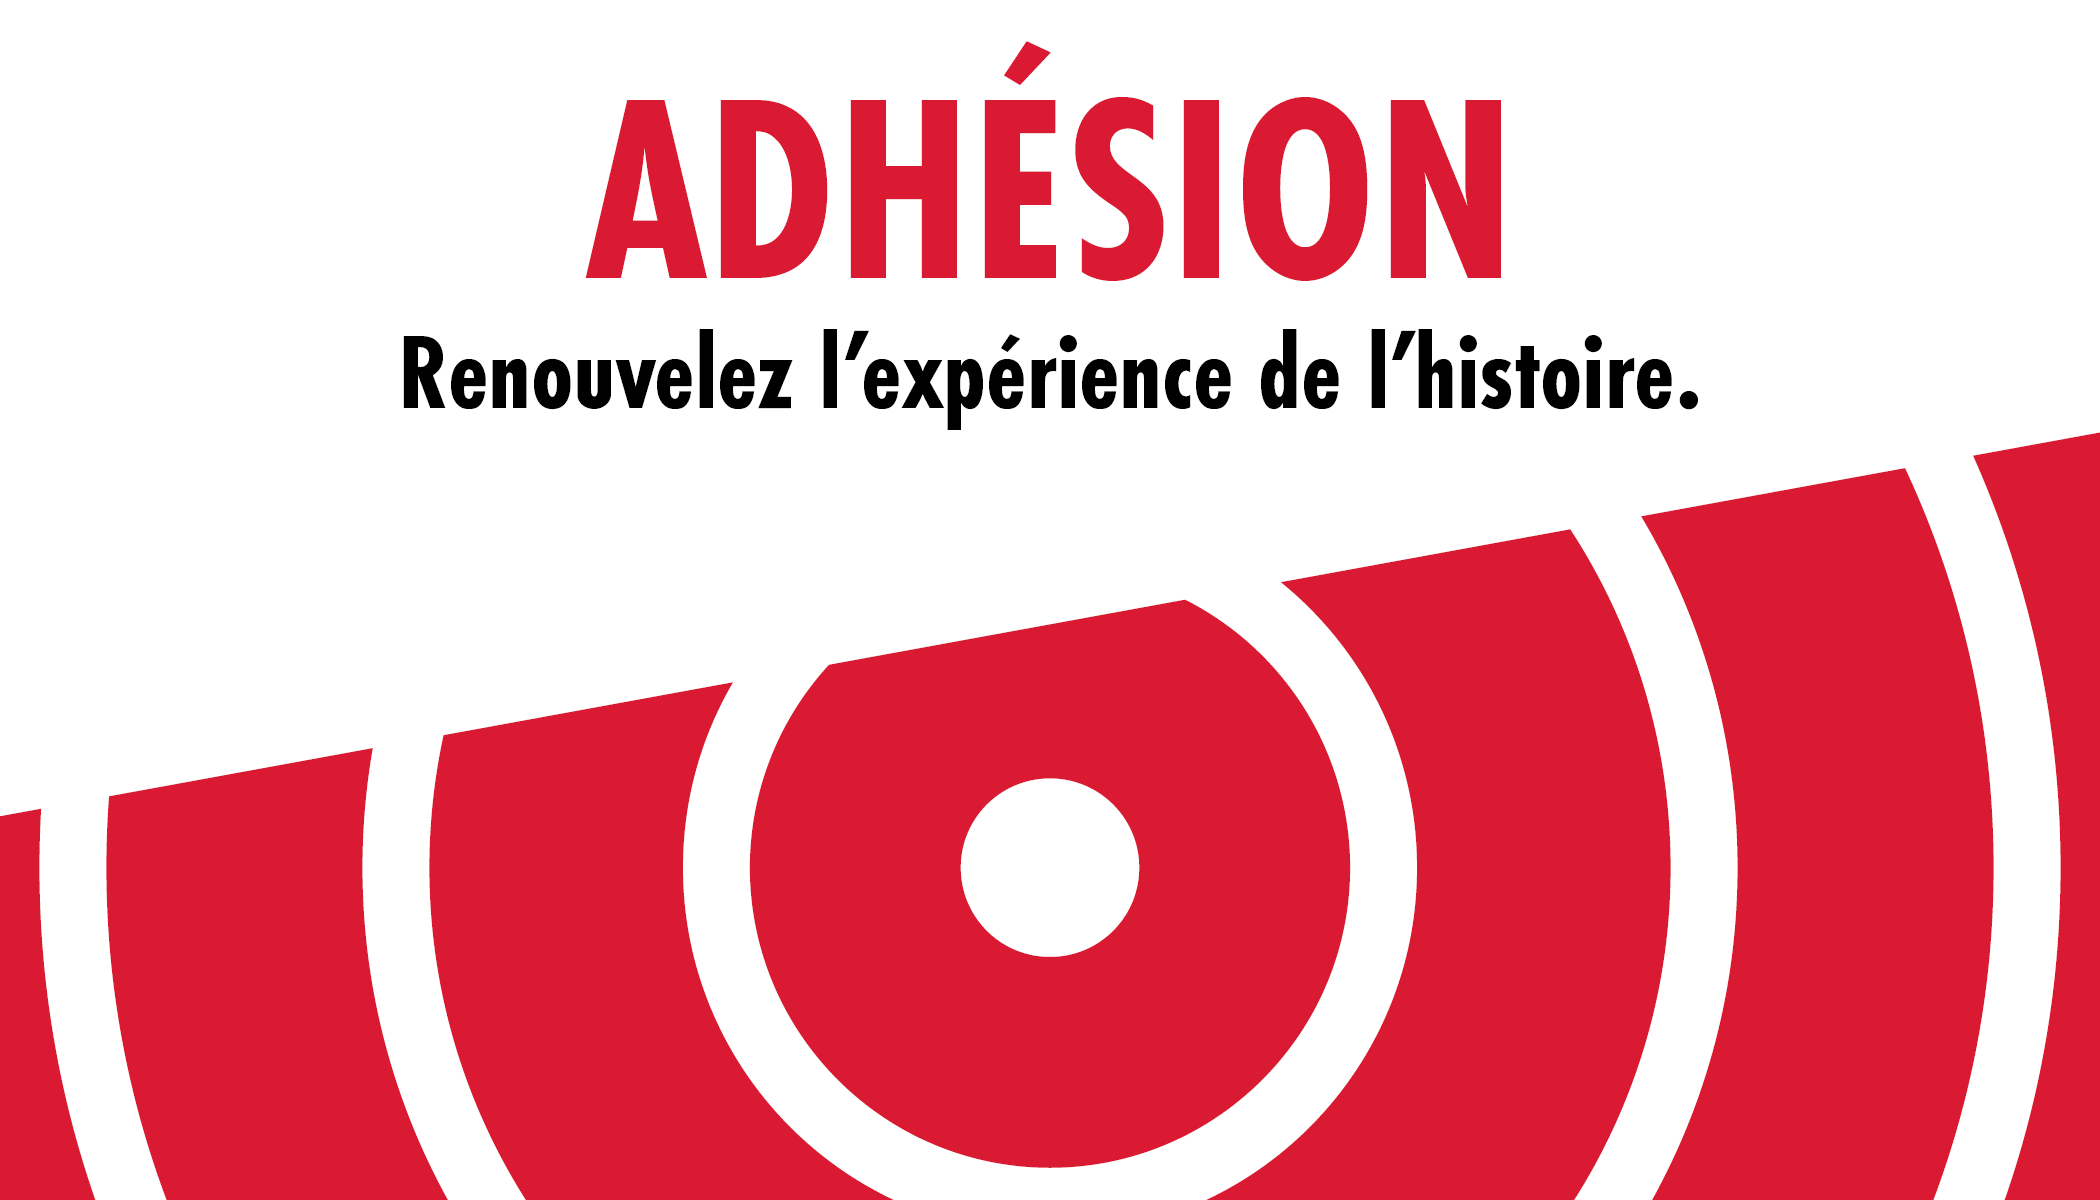 Text reads "Adhésion - renouvelez l'expérience de l'histoire" with red and white graphic of a target below.